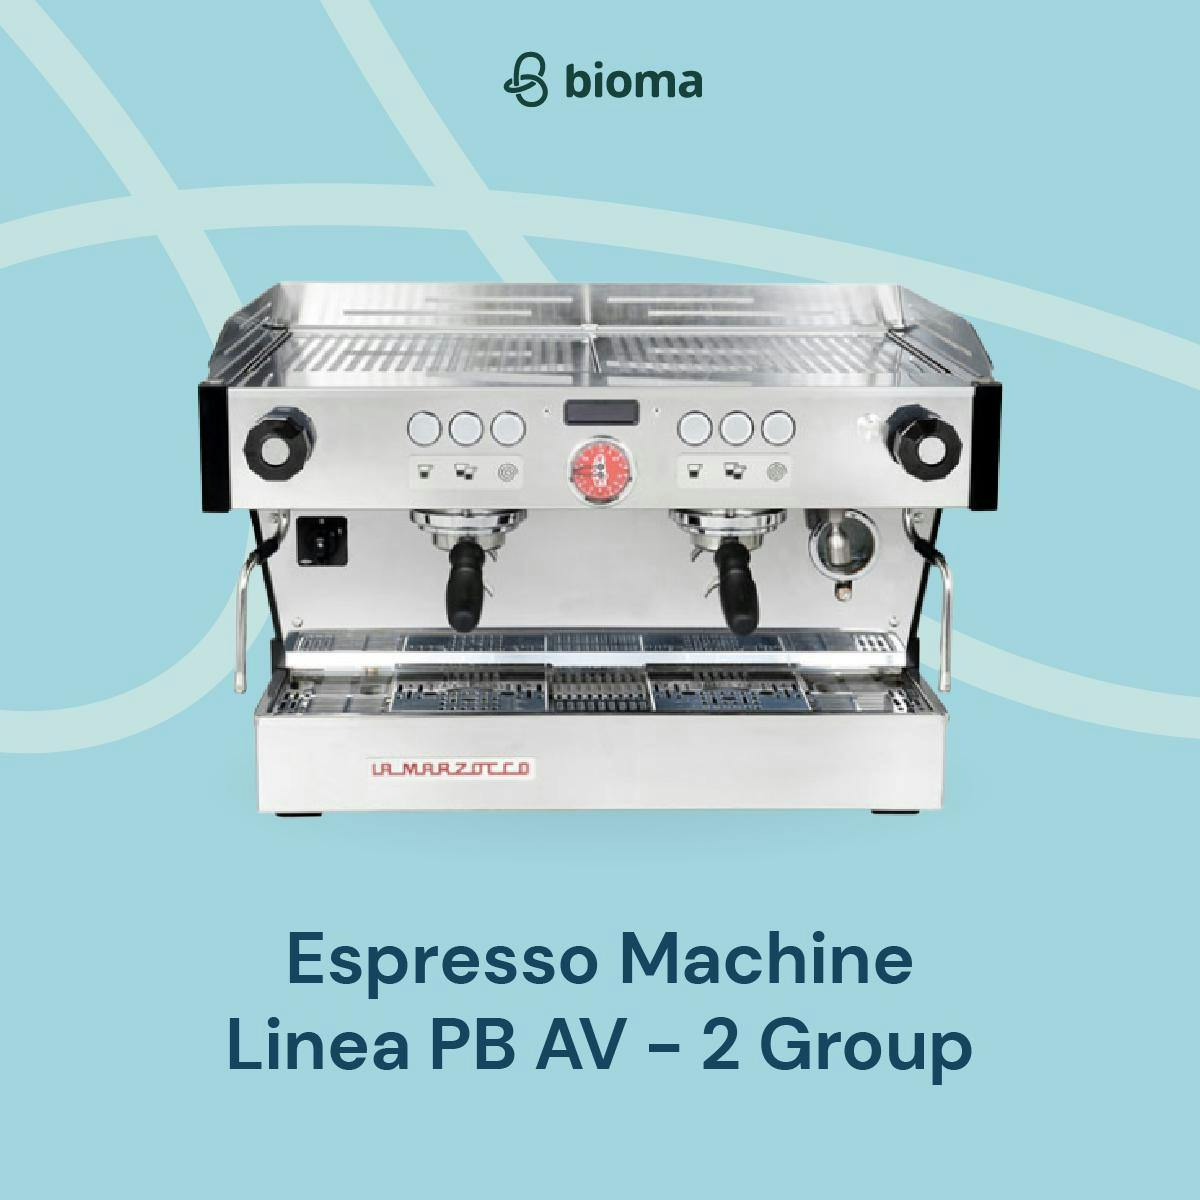 Espresso Machine - Linea PB AV - 2 Group